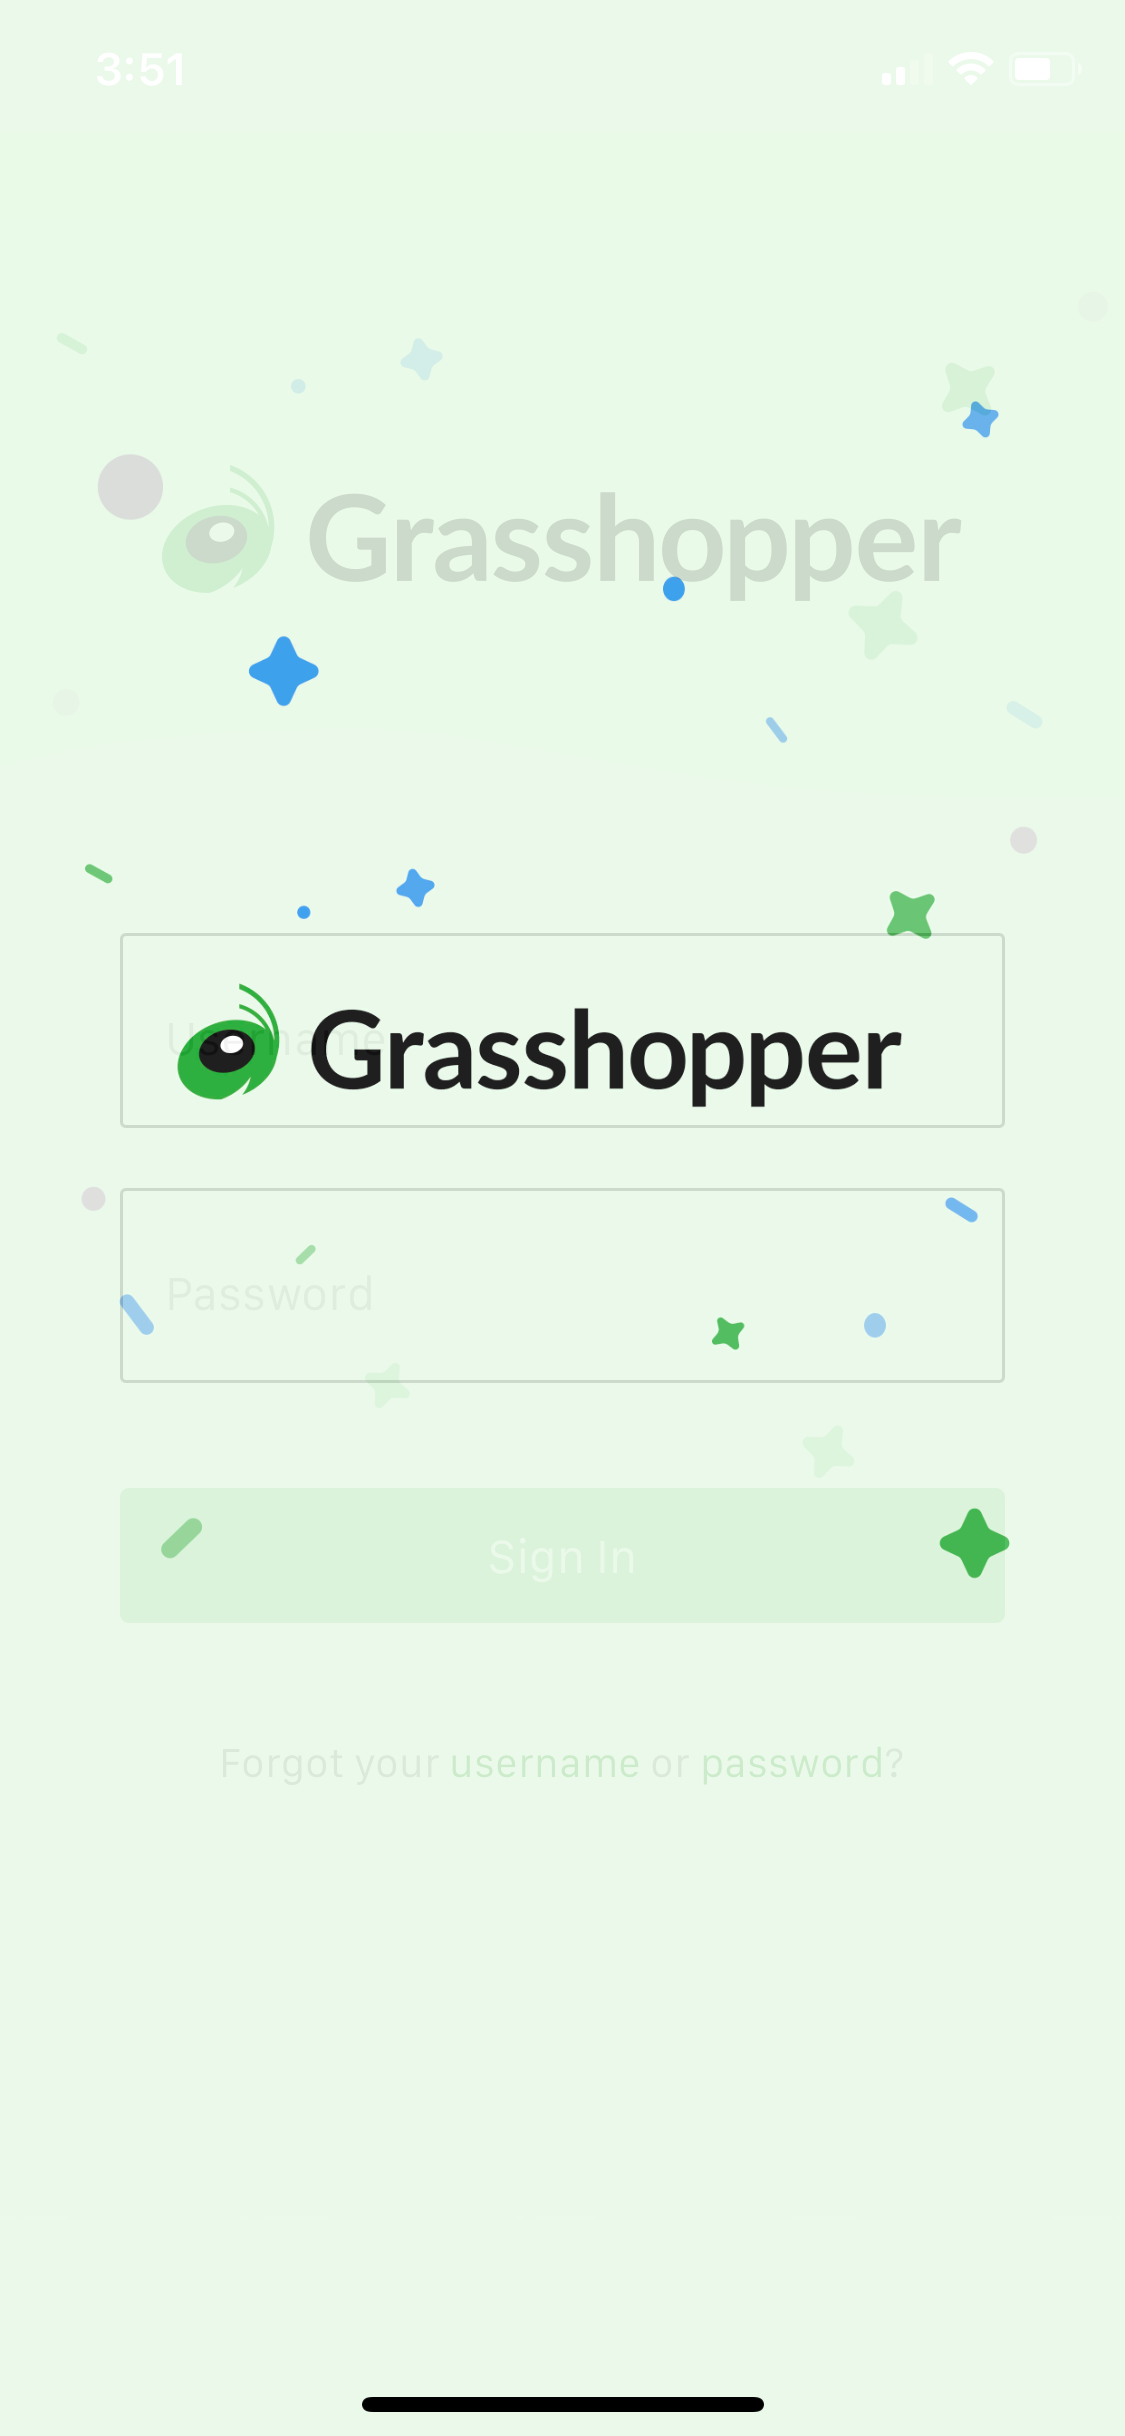 Screenshot of the Grasshopper logo page